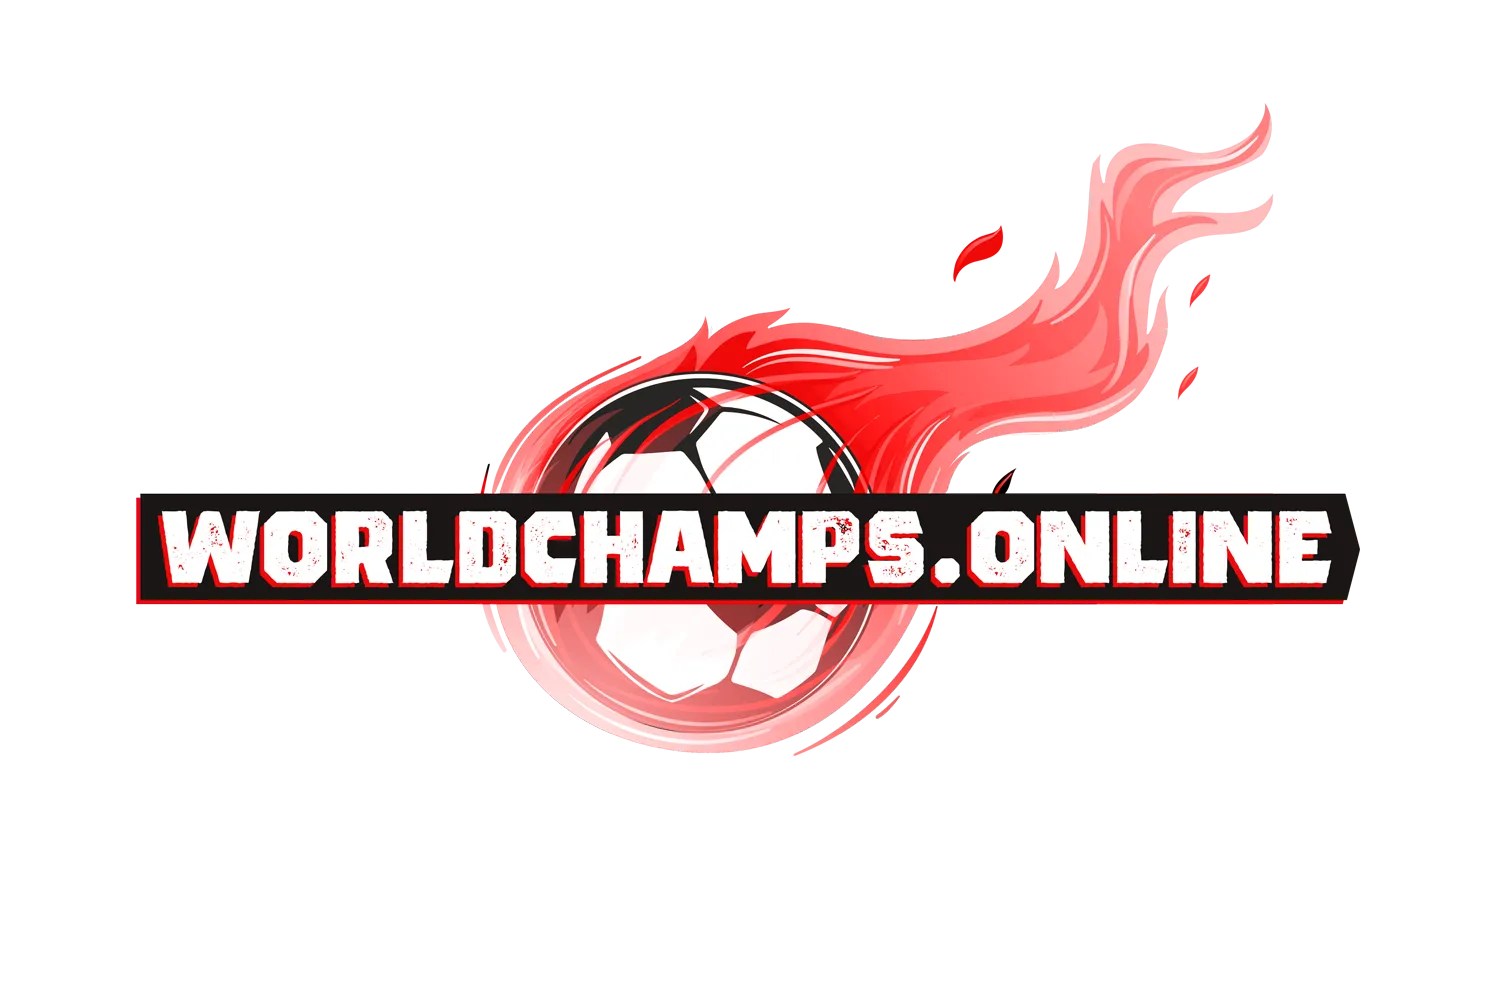 Worldchamps.online